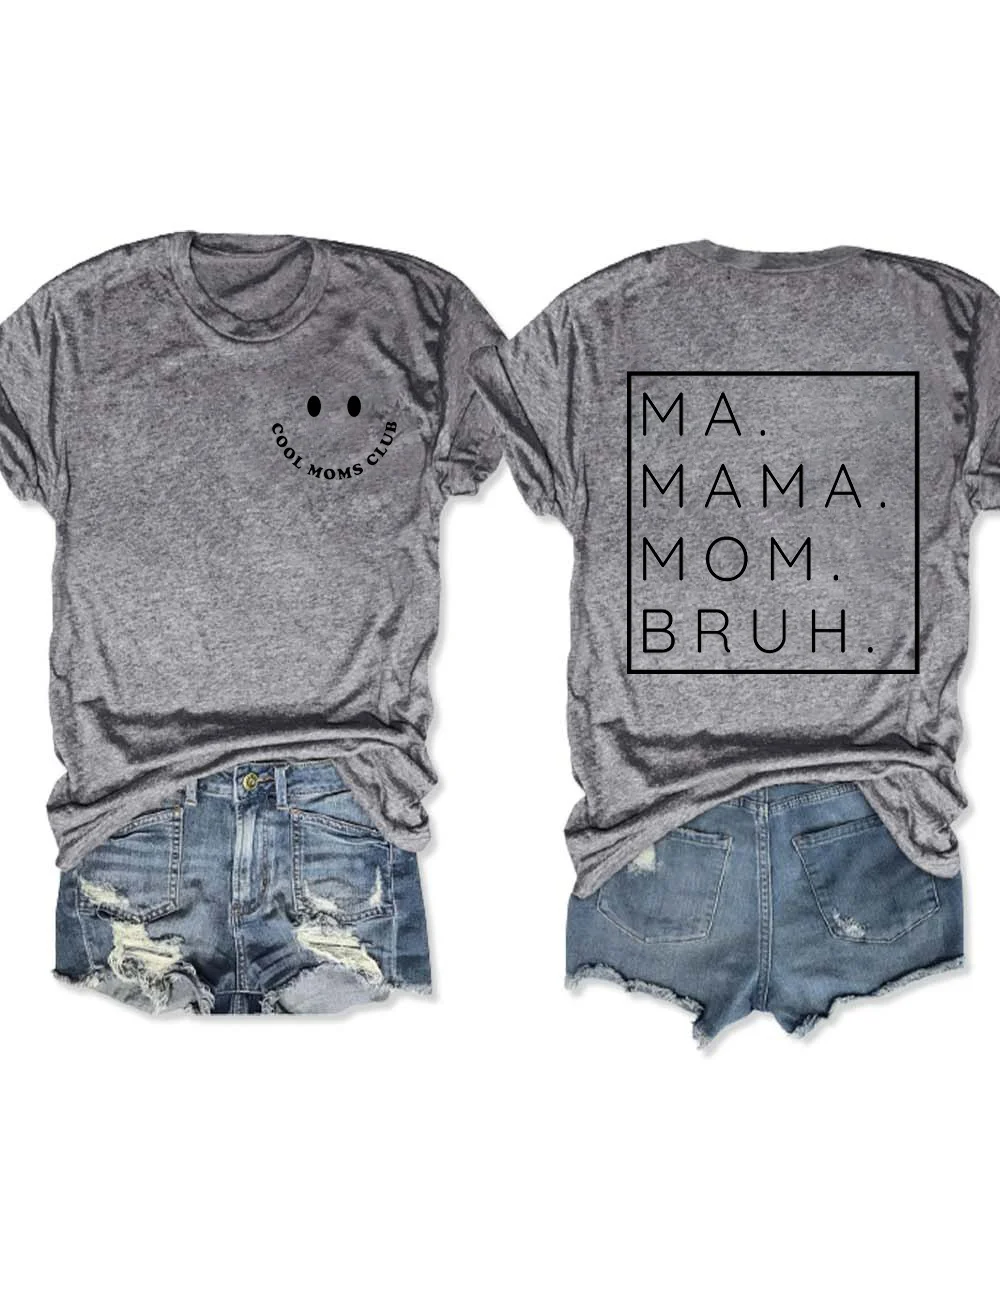 Cool Moms Club, Mama Mommy Mom Bruh T-Shirt